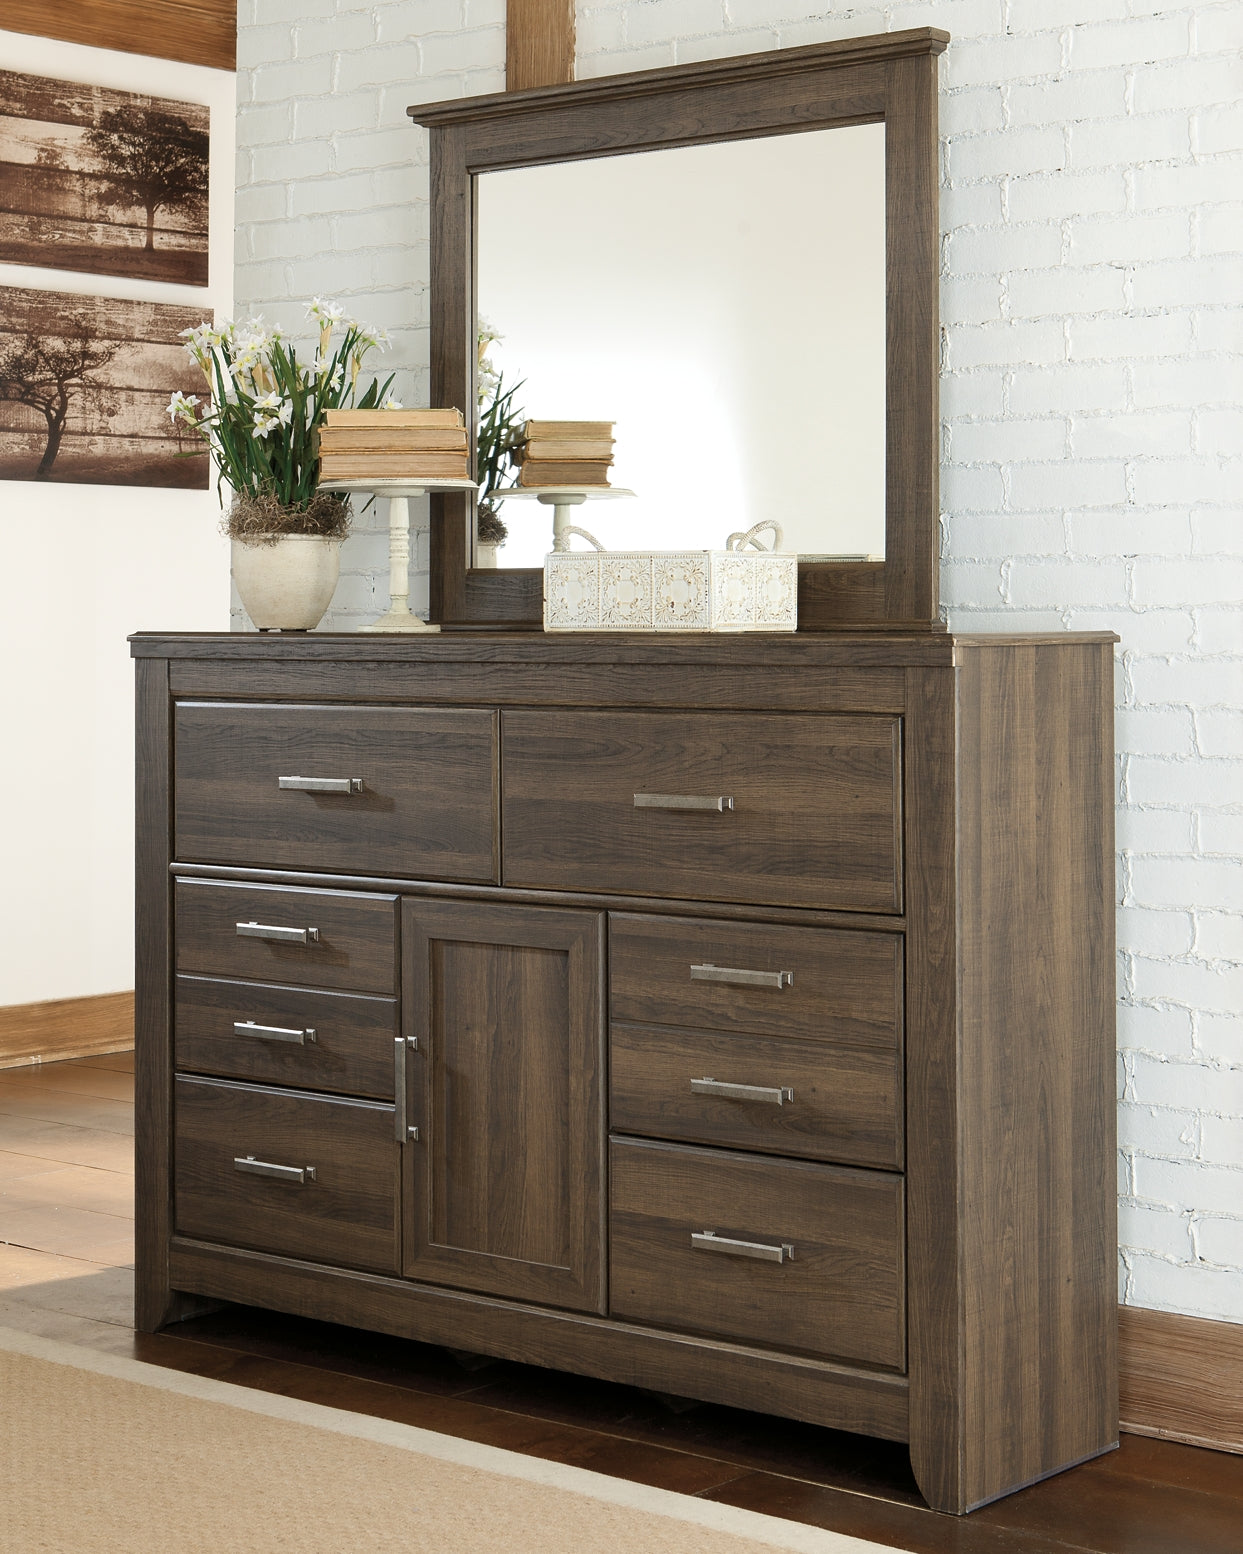 Juararo King/California King Panel Headboard with Mirrored Dresser JB's Furniture  Home Furniture, Home Decor, Furniture Store